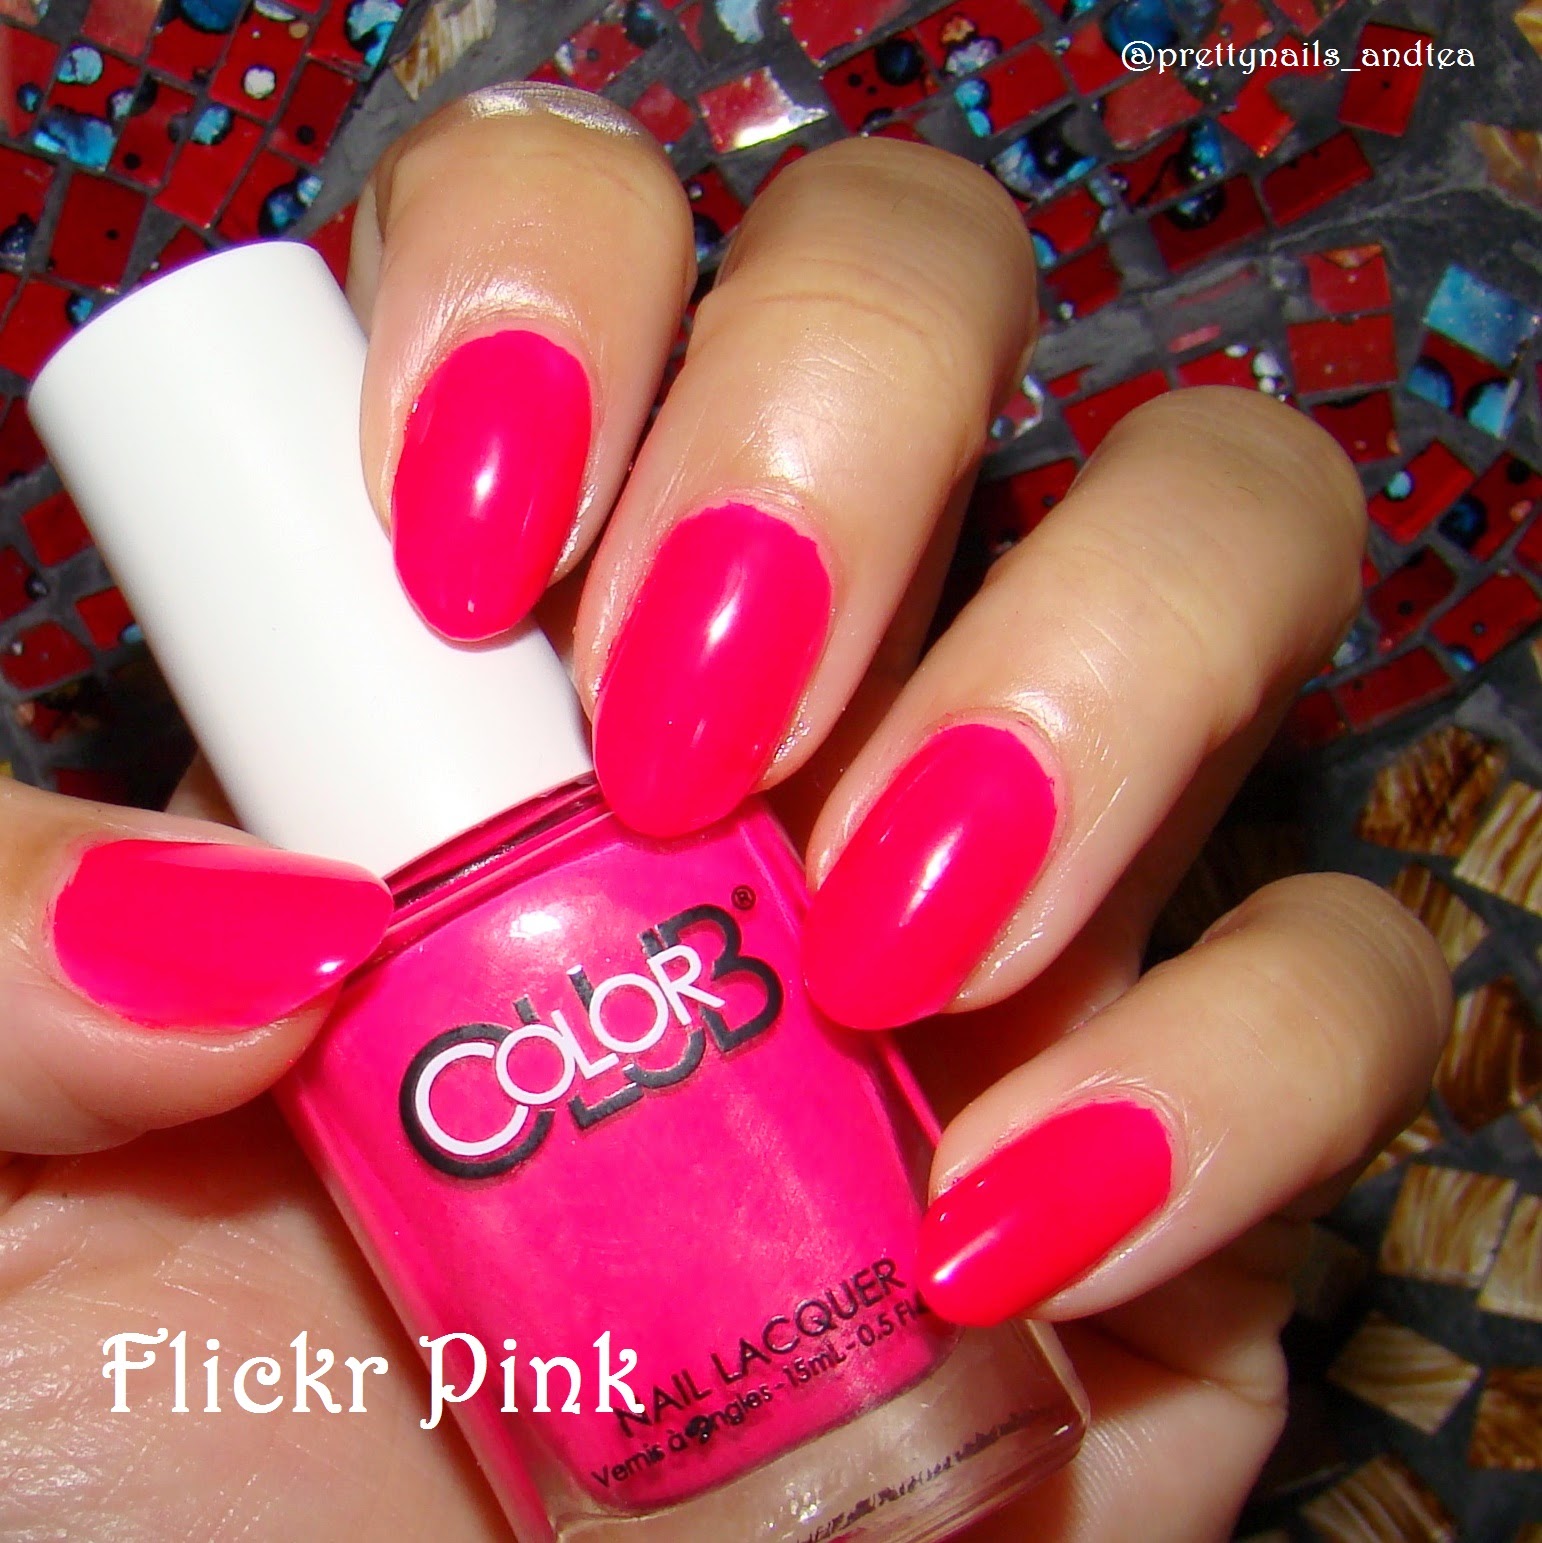 flckr pink color club yahoo